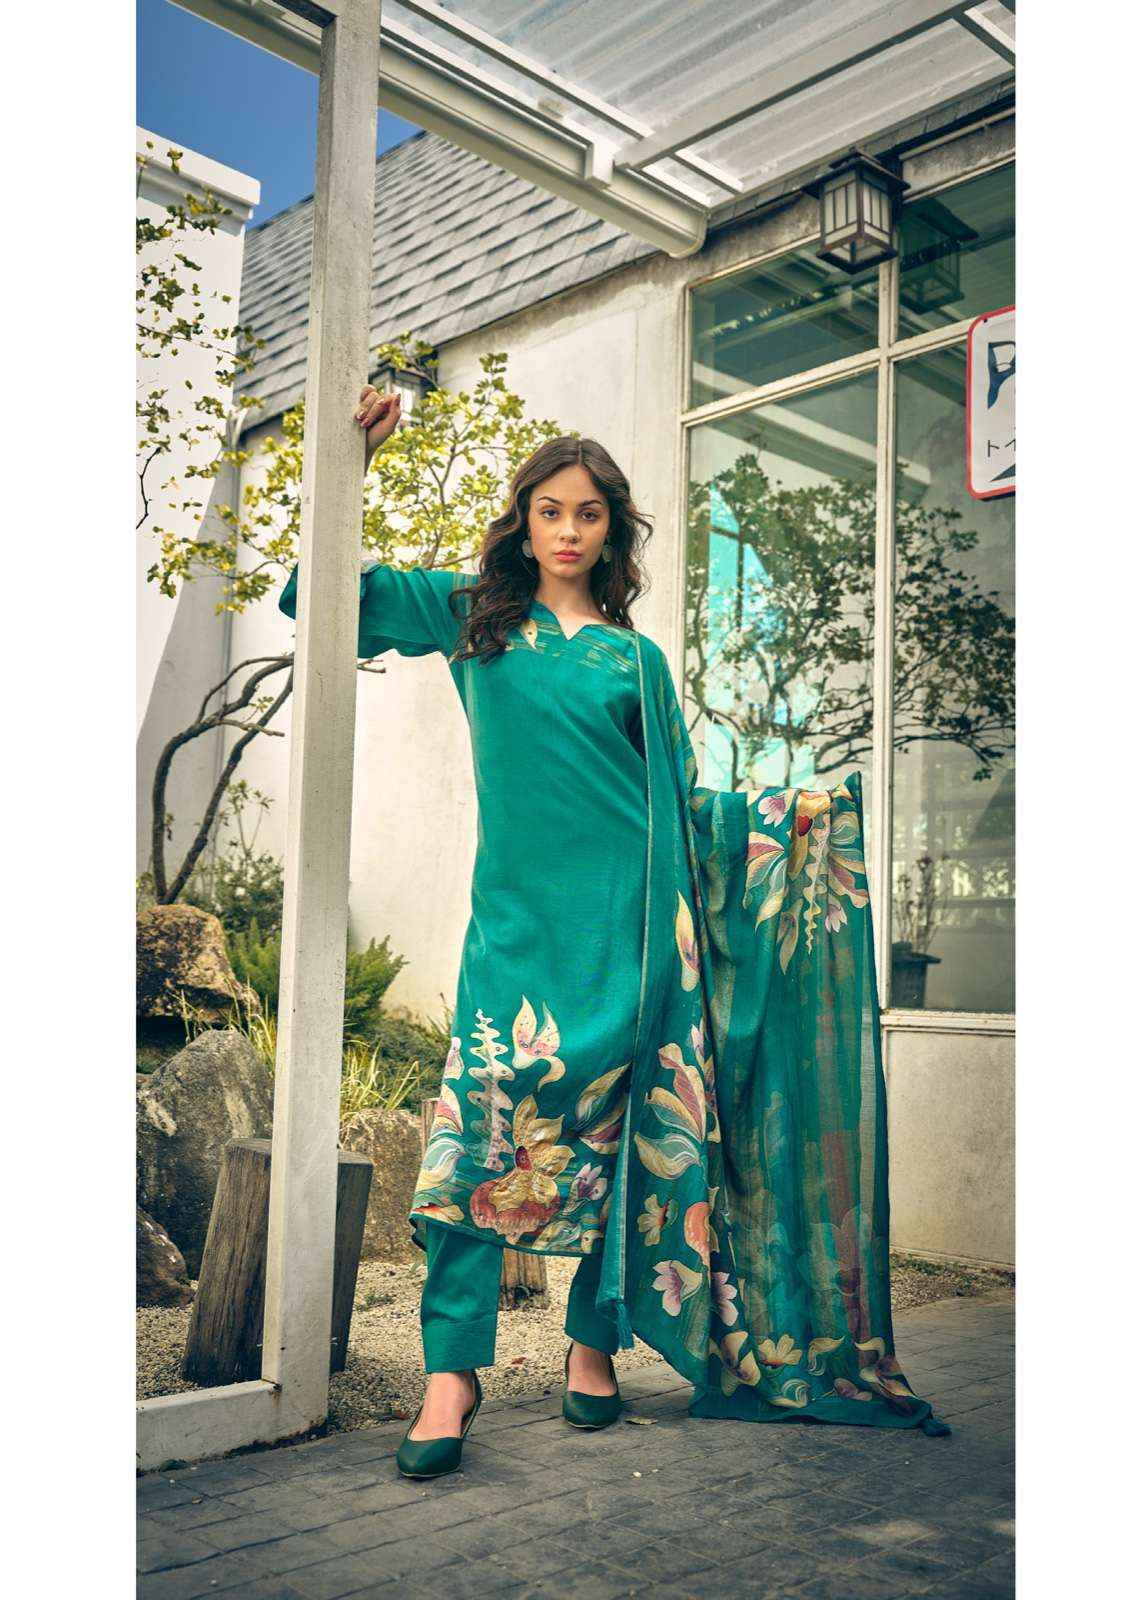 Sadhana Fashion Minerva Muslin Silk Dress Material 8 pcs Catalogue